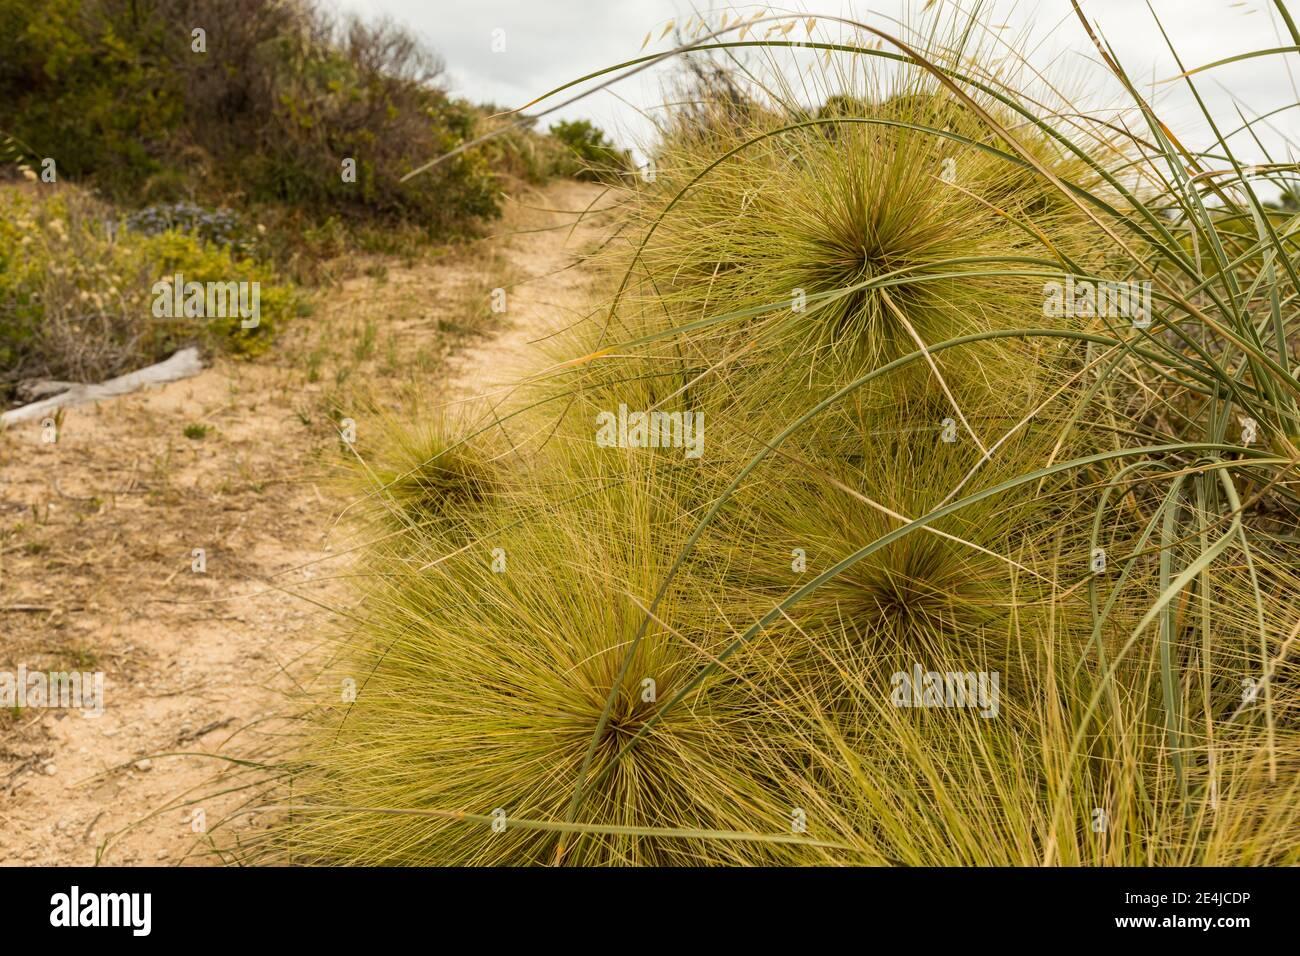 spinifex-longifolius-lining-path-to-beach-at-binningup-western-australia-2E4JCDP.jpg